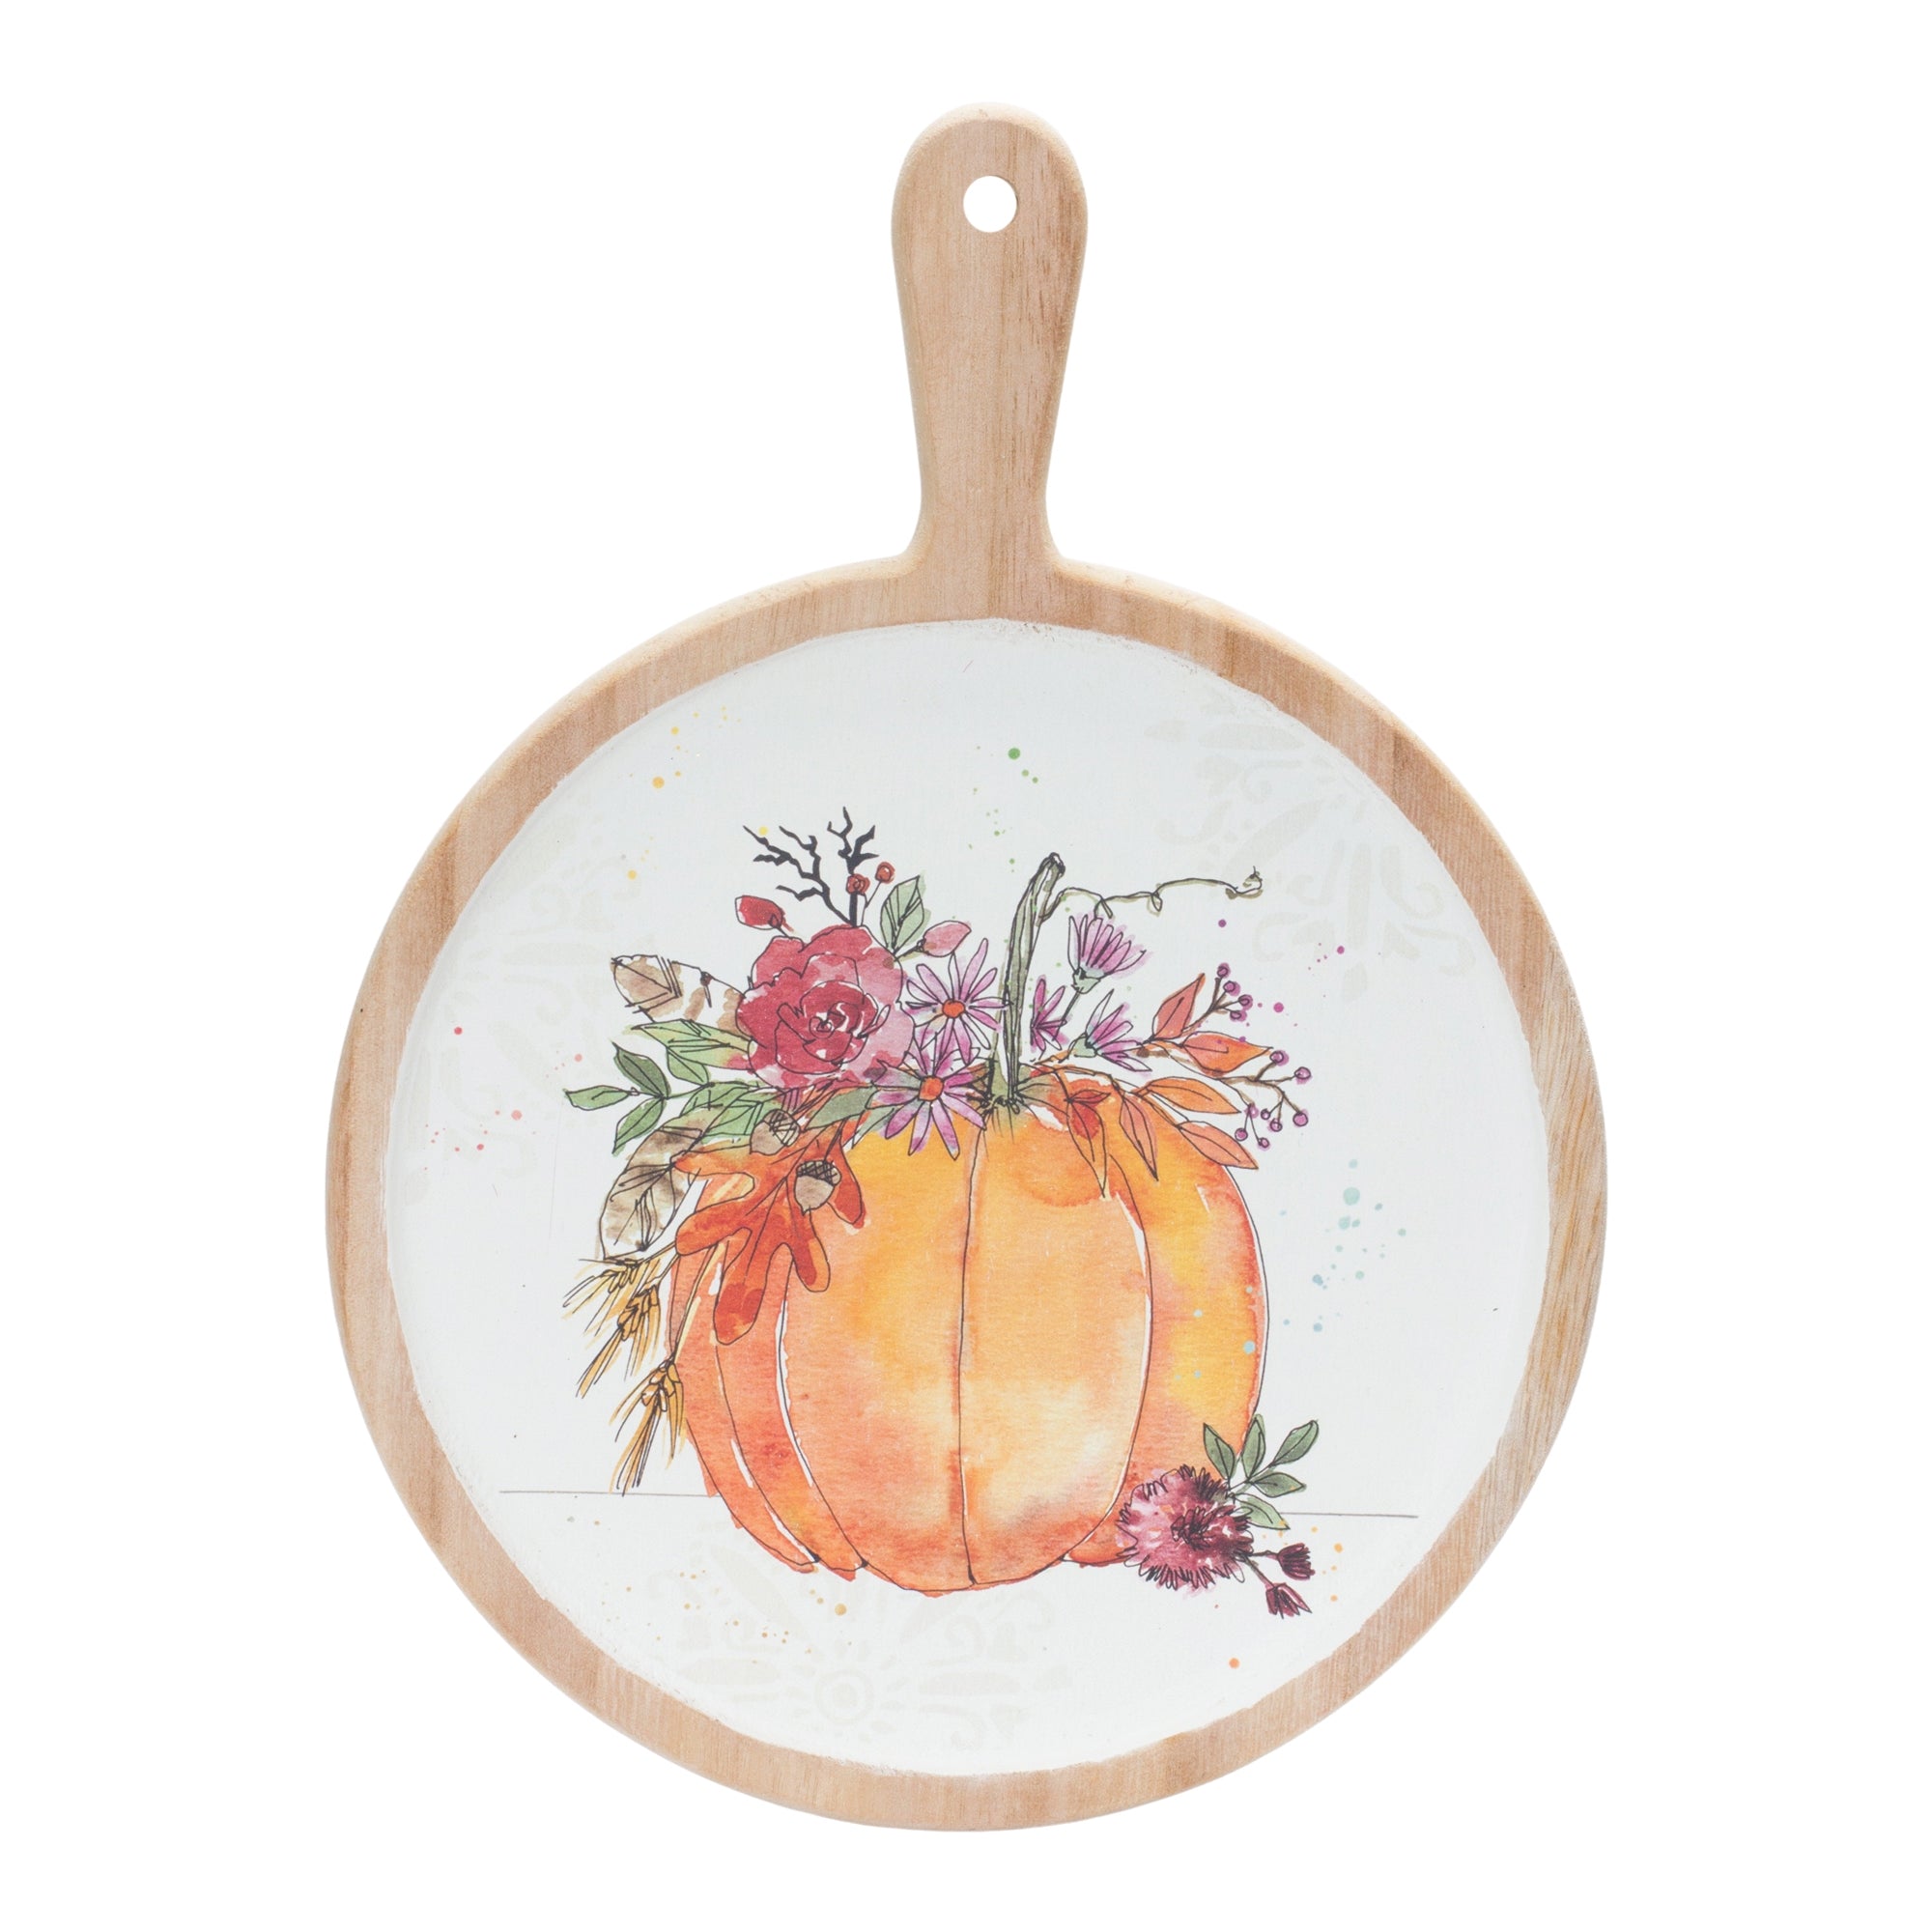 Watercolor Pumpkin Cutting Board (Set of 2)